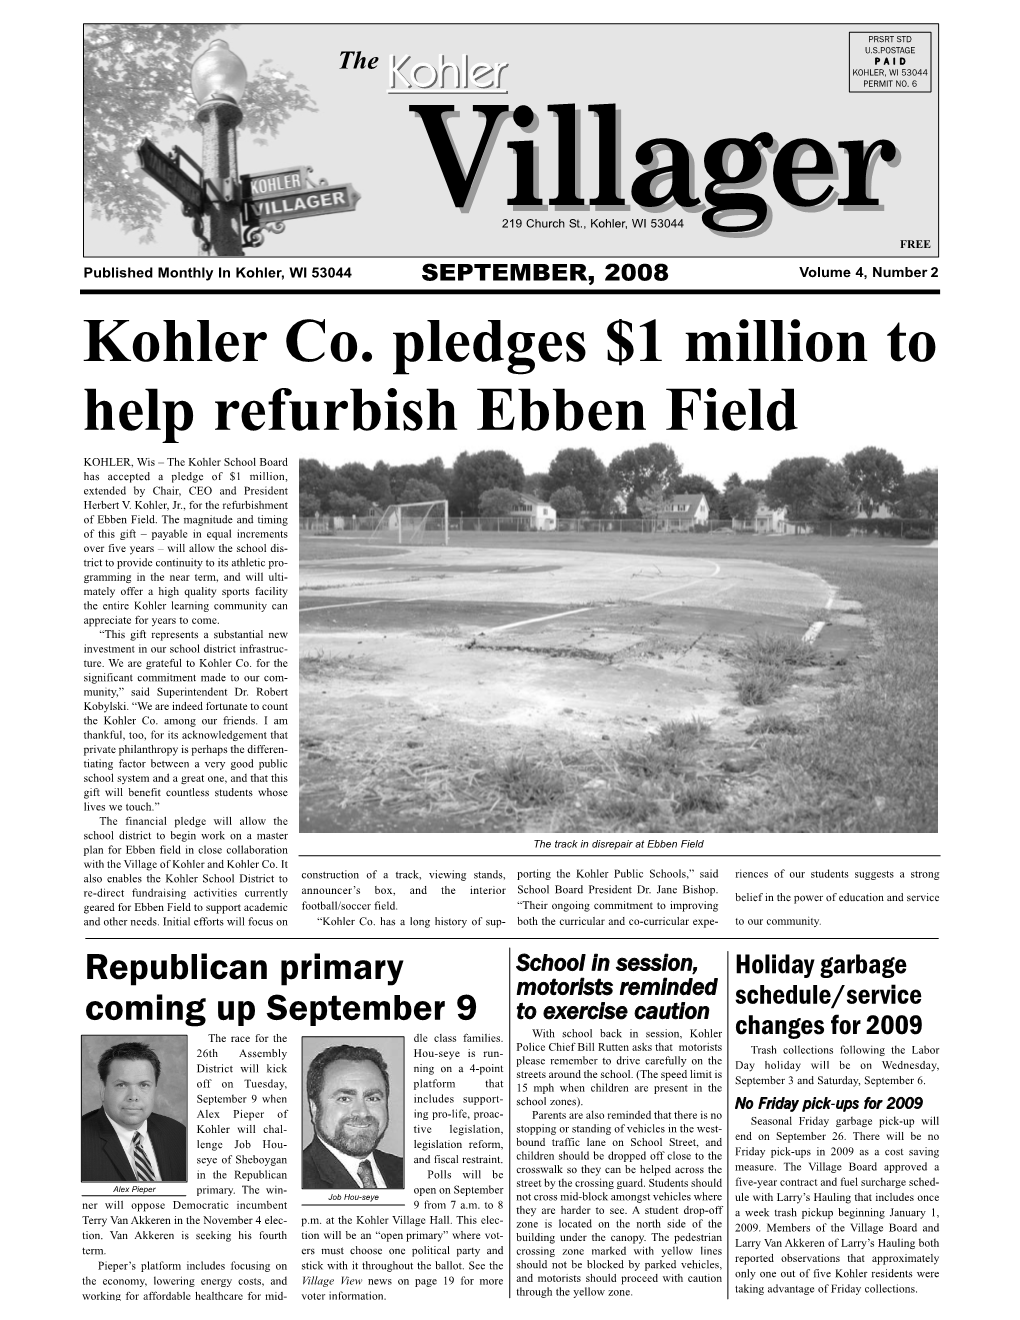 Kohler Co. Pledges $1 Million to Help Refurbish Ebben Field